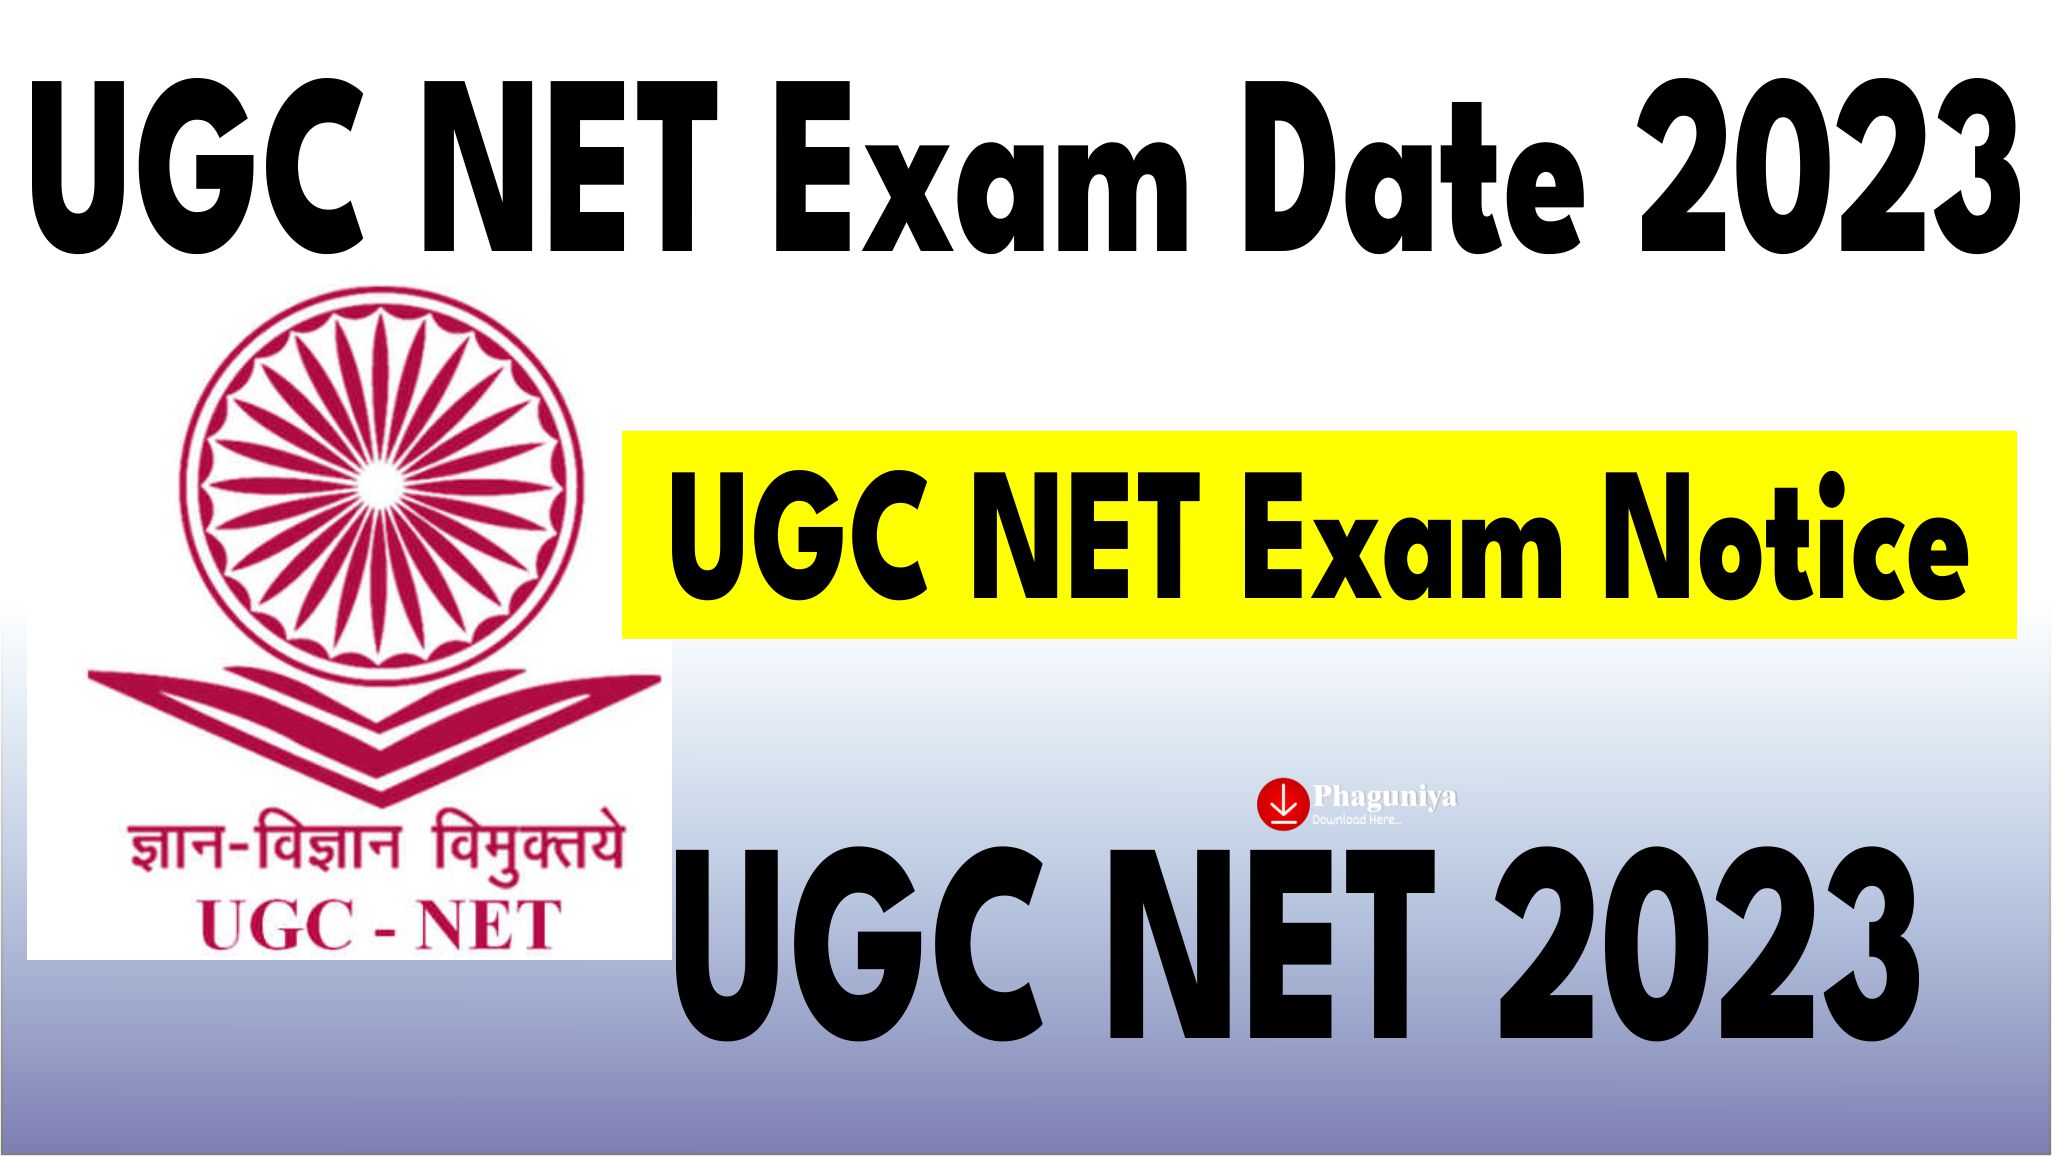 UGC NET Notes PDF, ugc net exam date 2023 subject wise, ugc net exam date 2023 official website, ugc net exam date 2023 subject wise pdf, ugc net application form 2023, ugc net exam date 2023 phase 2, ugc net exam date 2023 phase 3, ugc net 2023 notification, ugc net exam date 2023 admit card download, ugc net exam date subject wise 2023, ugcnet. nta. nic. in, ugc net 2023 exam date, ugc net admit card by name and date of birth, ugc net admit card download pdf, ugc net login, ugc net admit card 2023, ugcnet.nta.nic.in 2023,